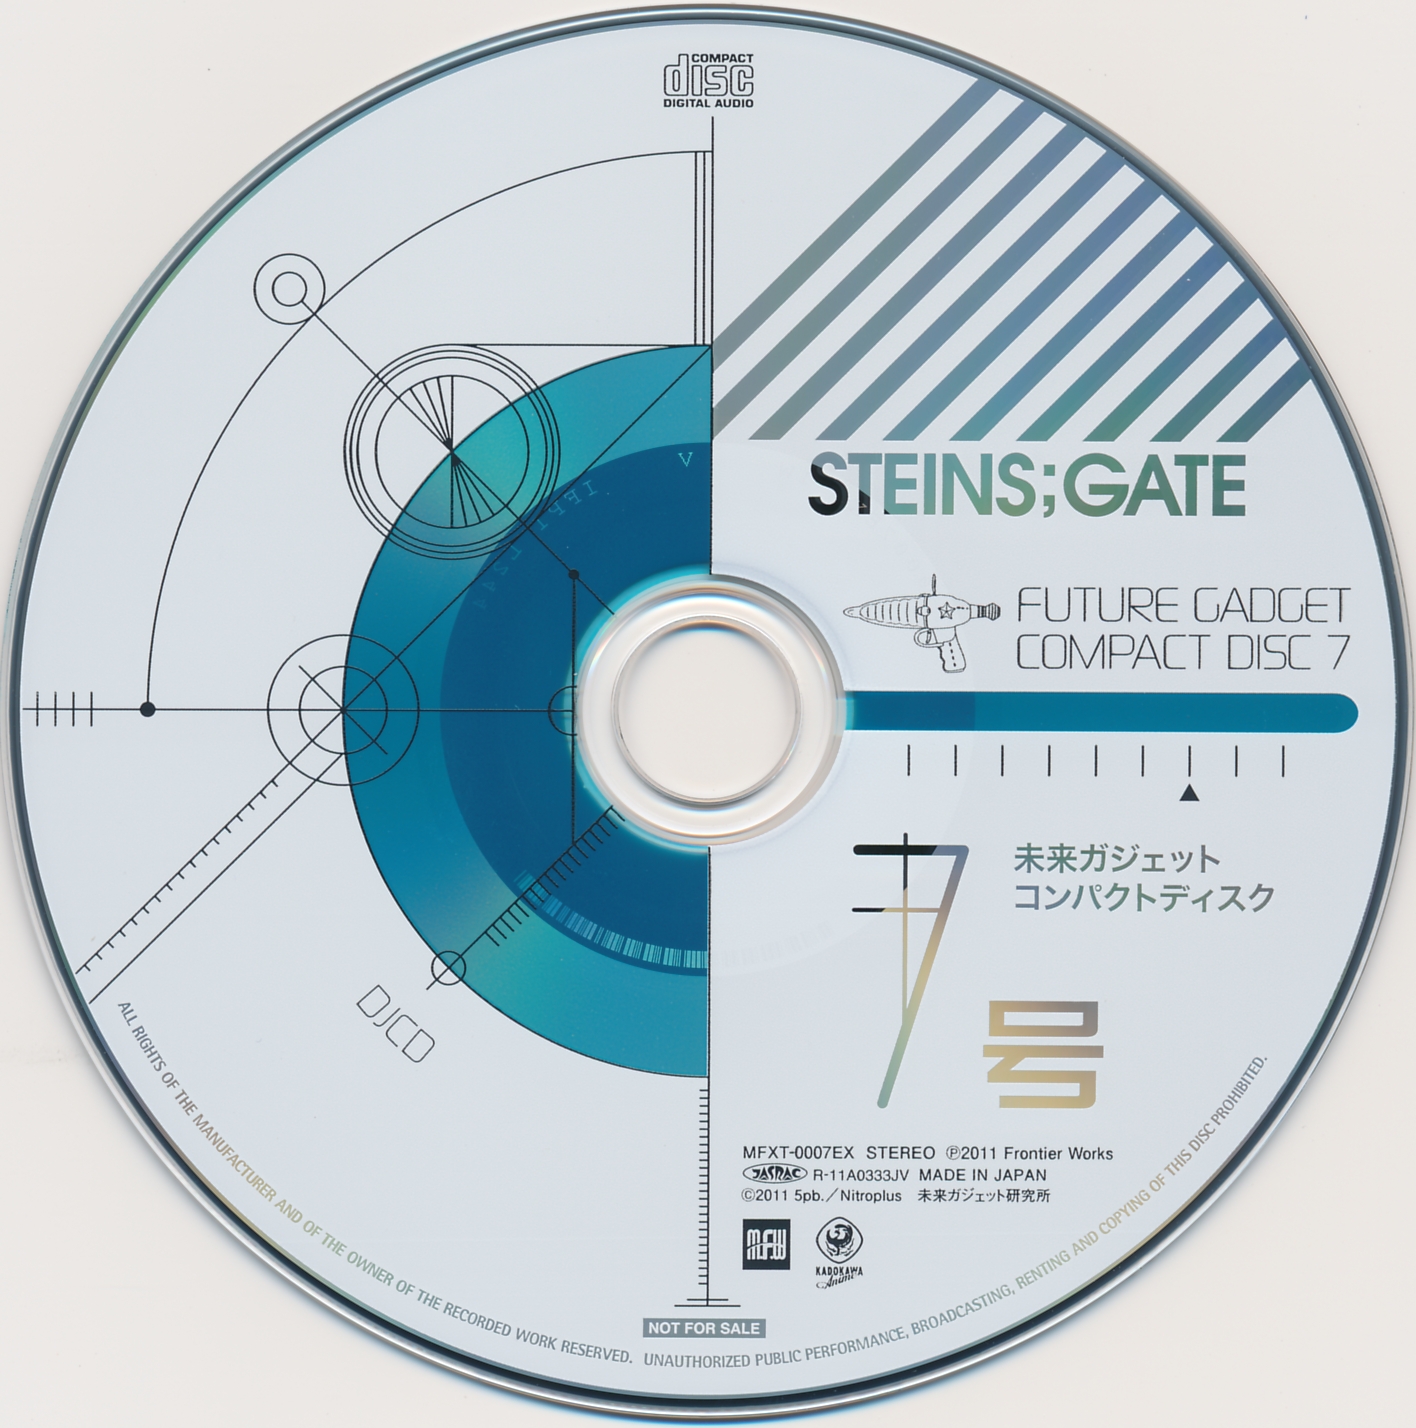 光碟-STEINS;GATE FUTURE GADGET COMPACT DISC 7.jpg